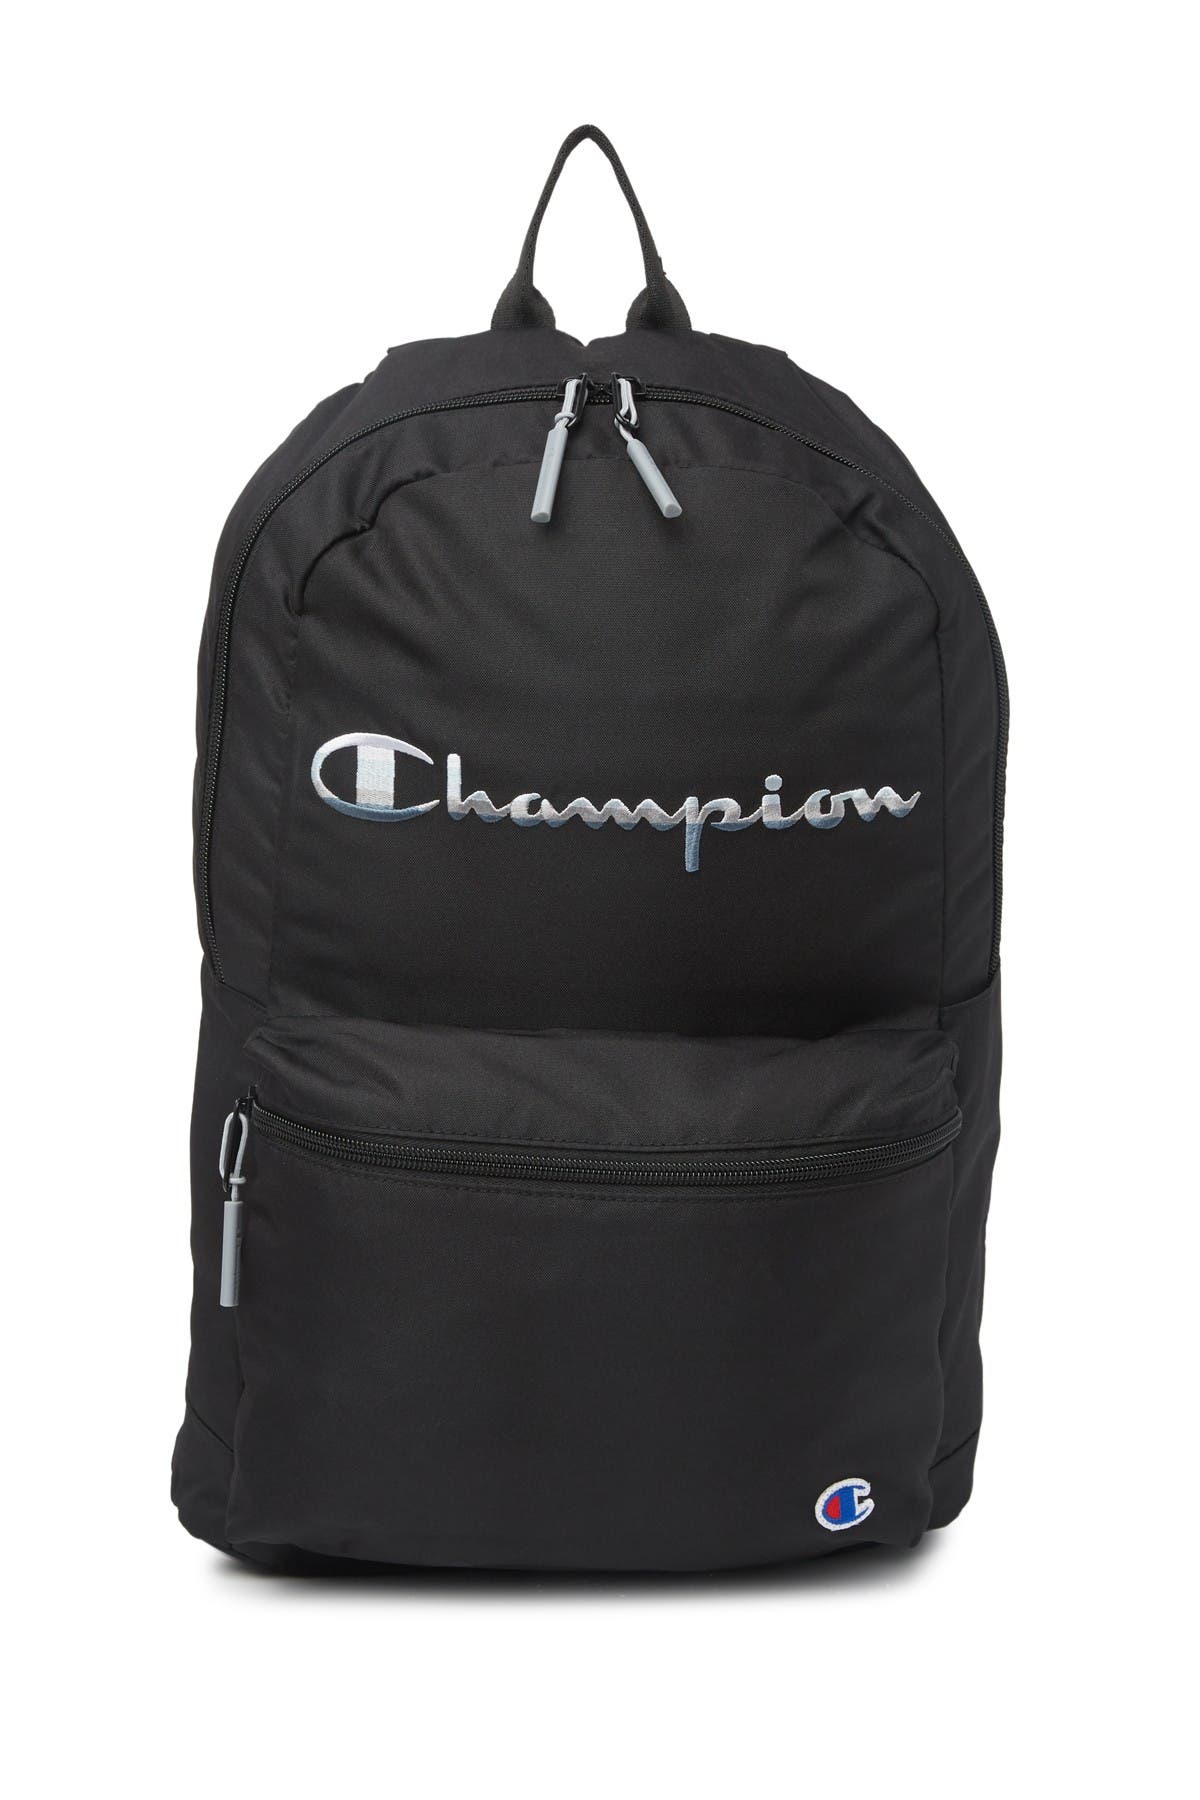 champion backpack nordstrom